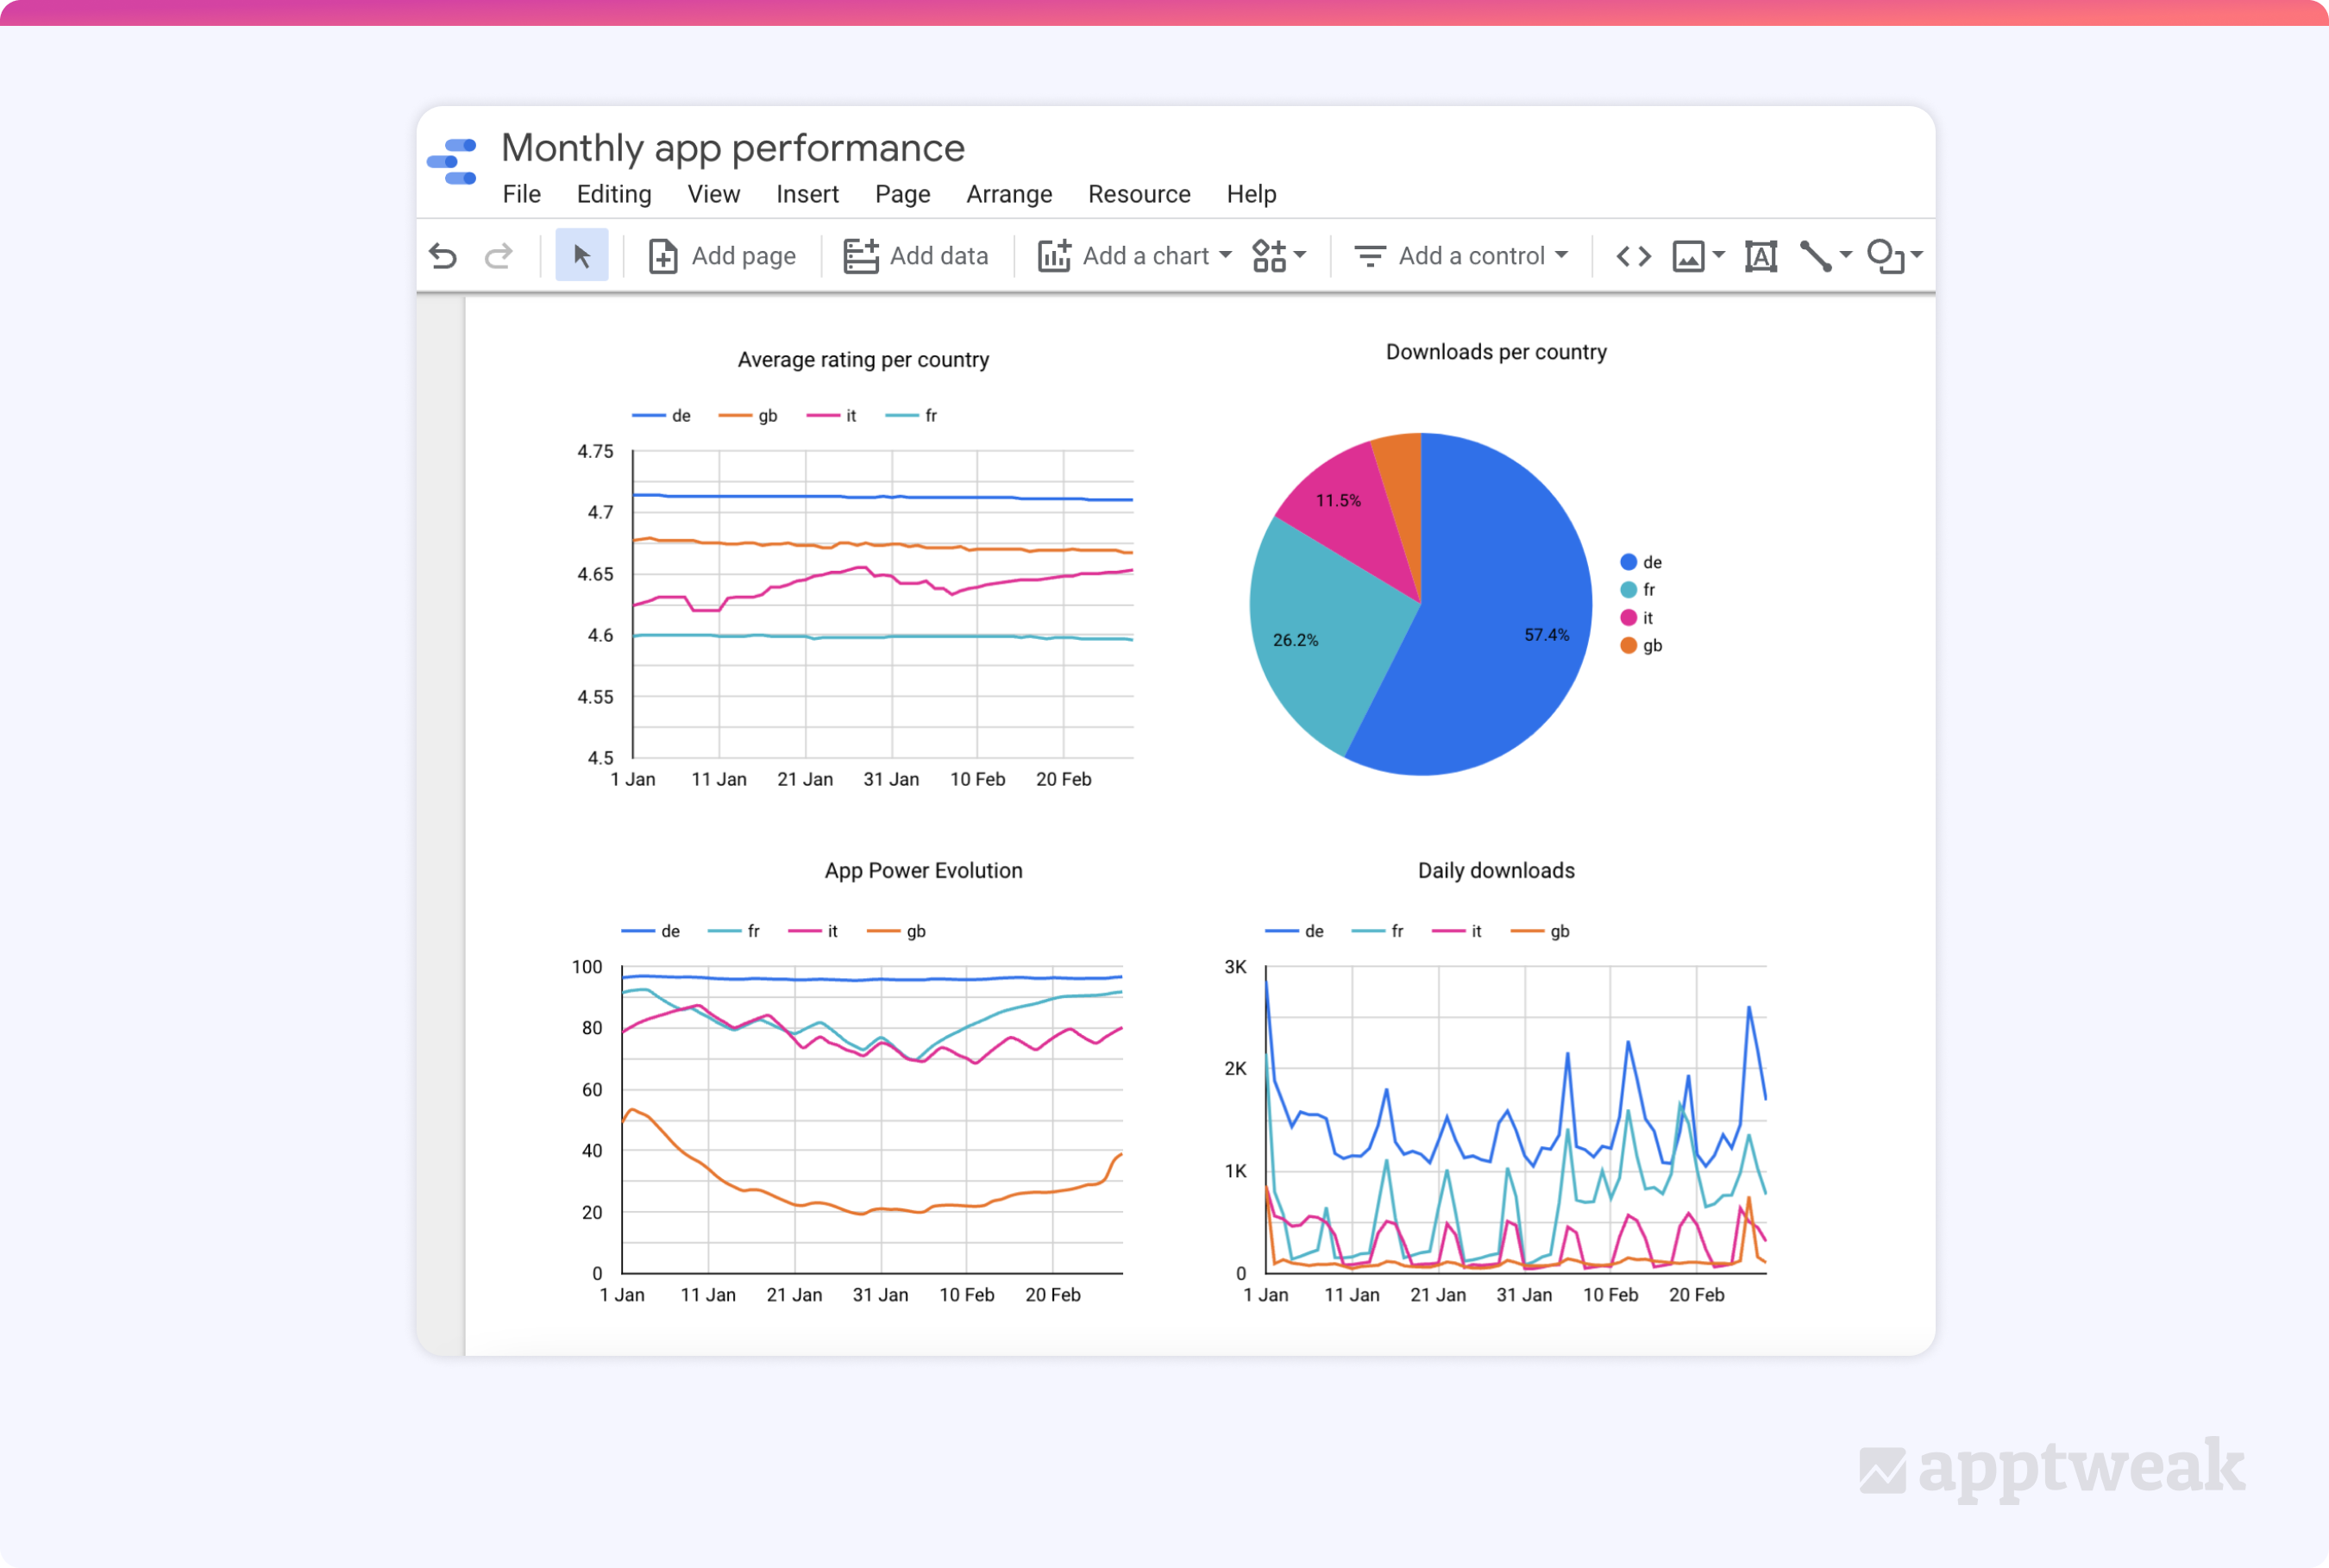 Custom dashboard created on Google Data Studio for the Tier app on the App Store